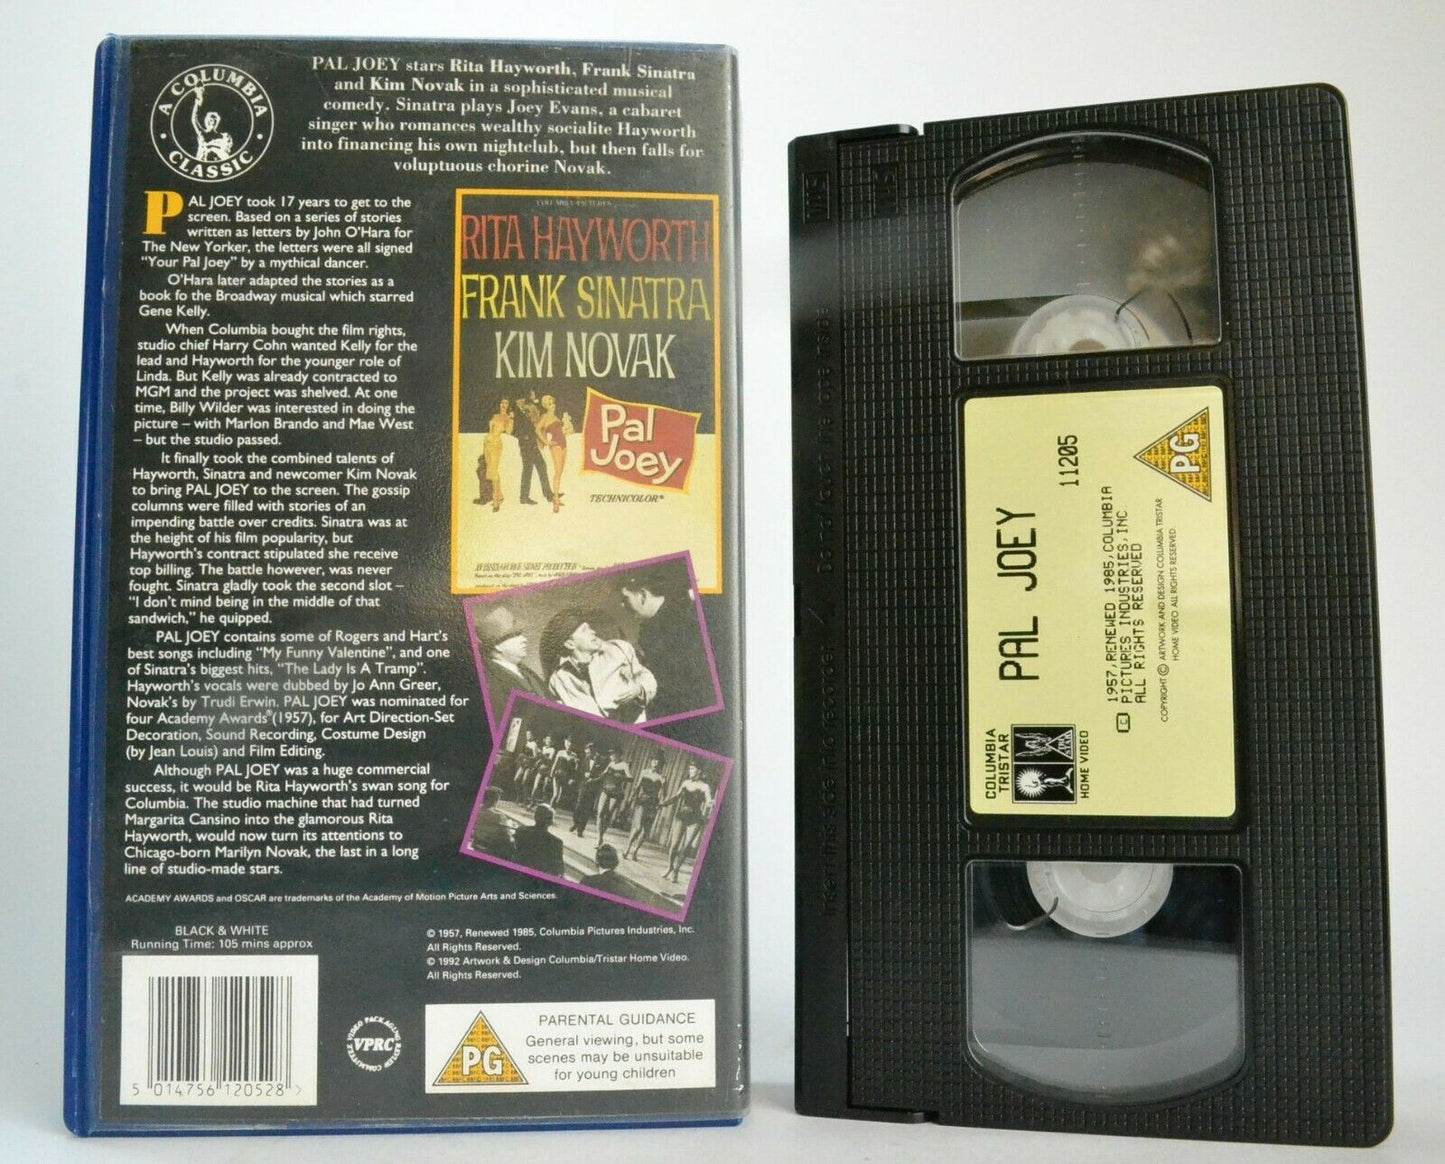 Pal Joey; [Technicolor] Musical Comedy - Rita Hayworth / Frank Sinatra - Pal VHS-